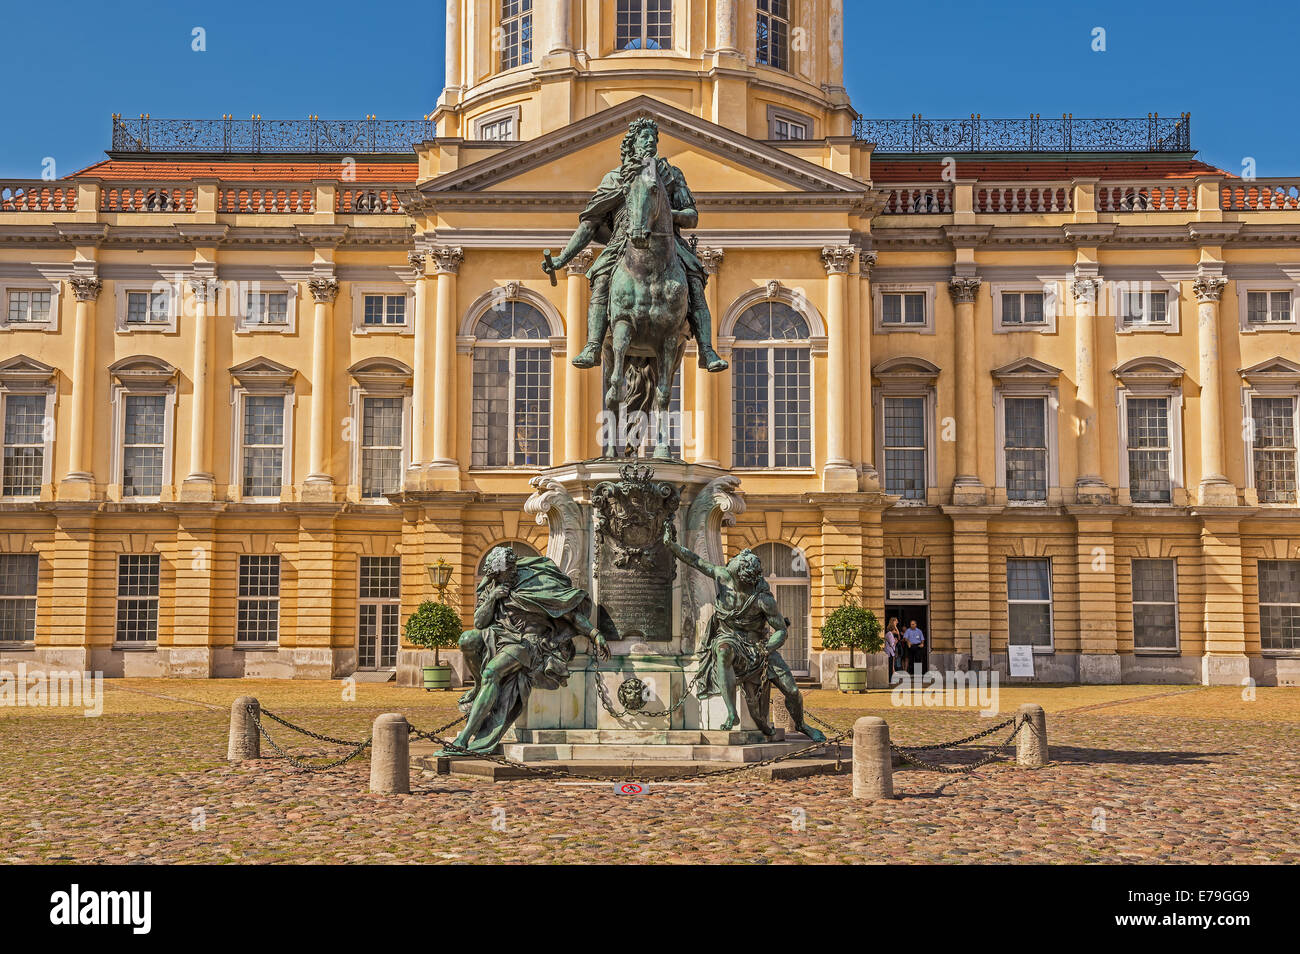 El Palacio de Charlottenburg (Schloss Charlottenburg) en Berlín. Foto de stock